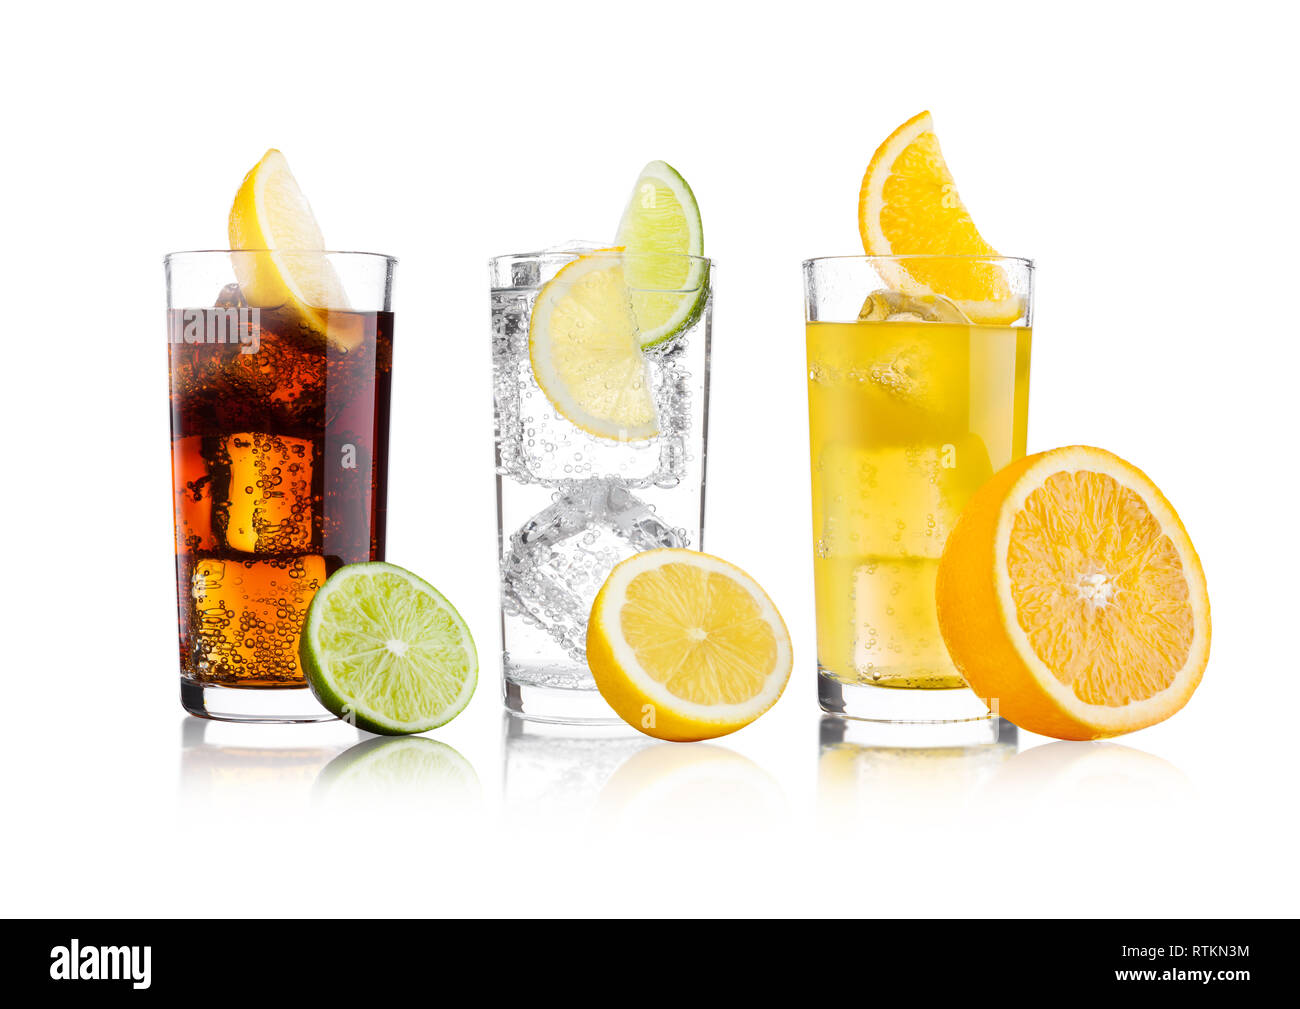 Premium Photo  Glasses of soda flavors orange lemon and cola